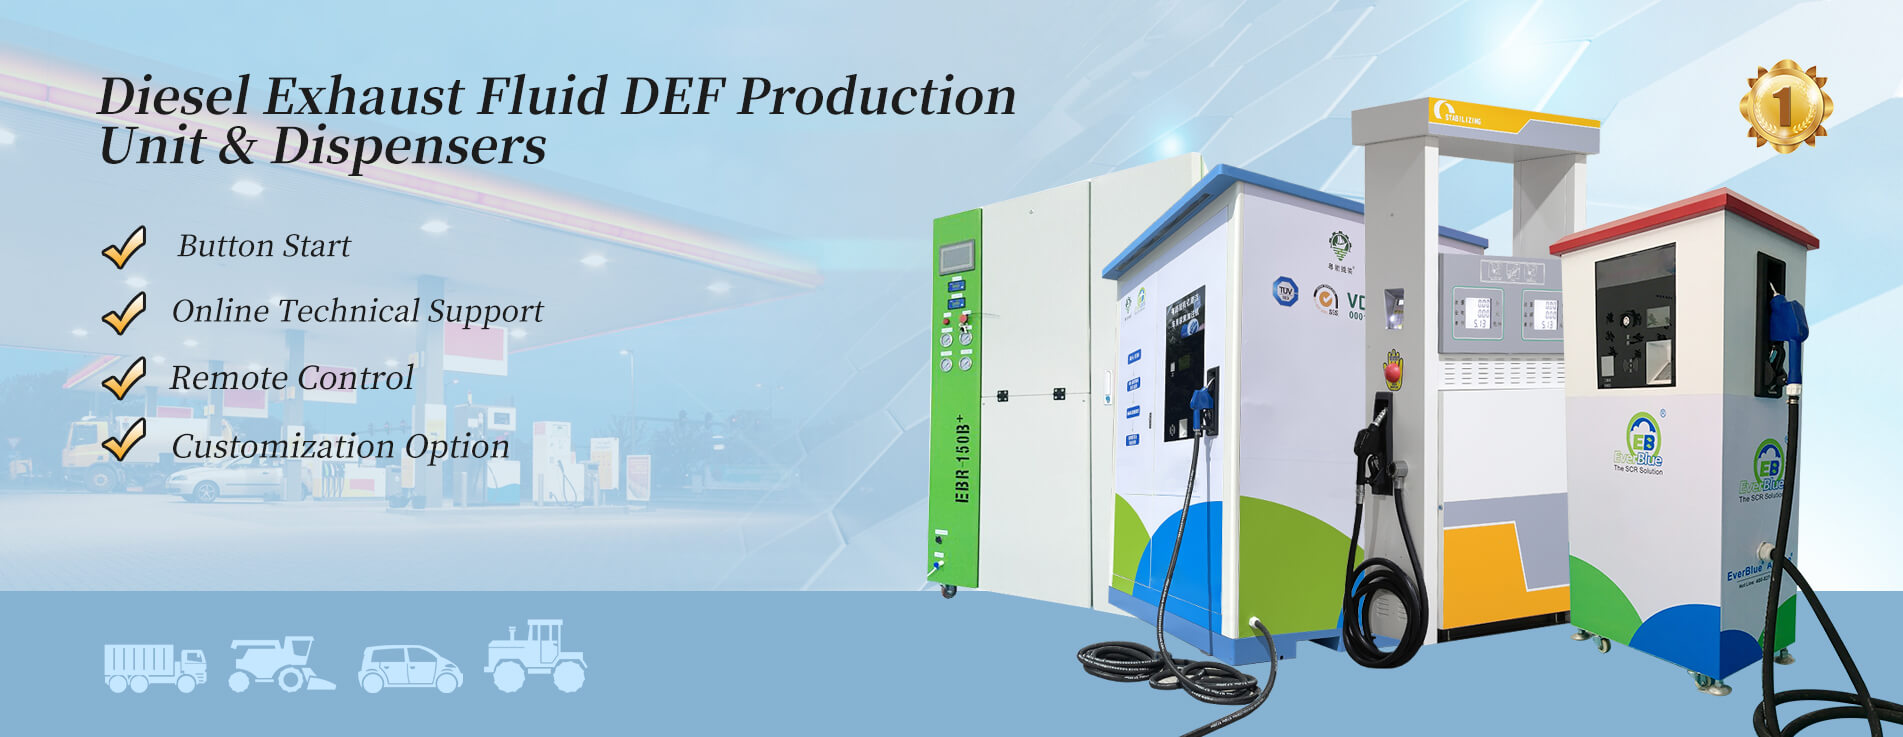 DEF Production Machine & Dispenser